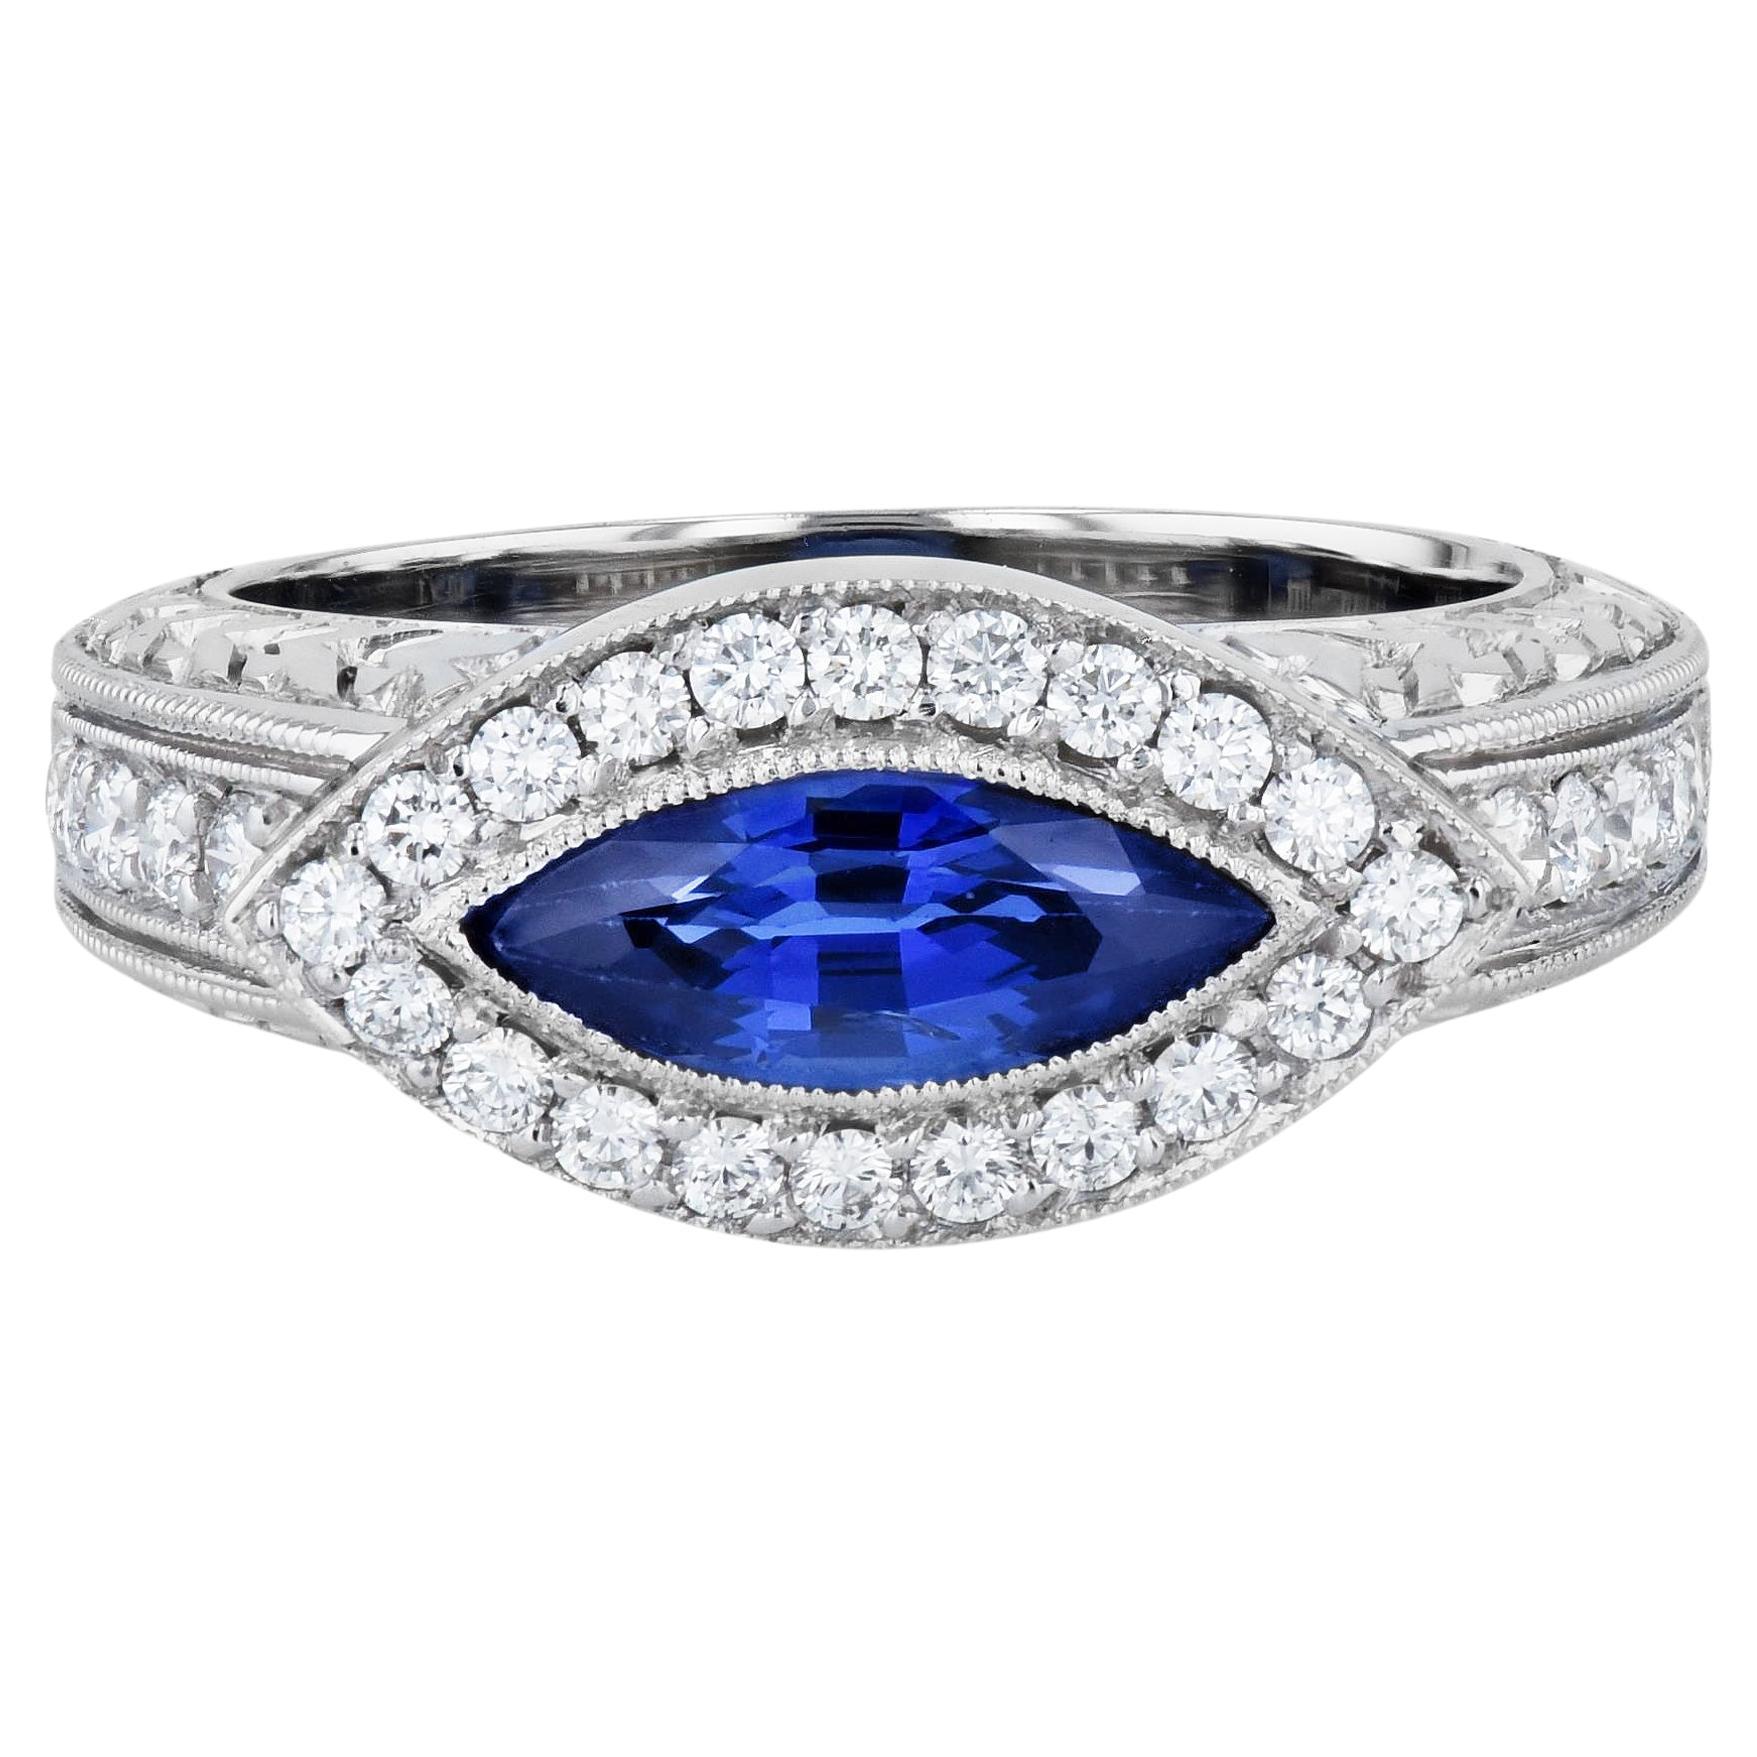 Handmade Marquise Blue Sapphire Pave Diamond Platinum Ring